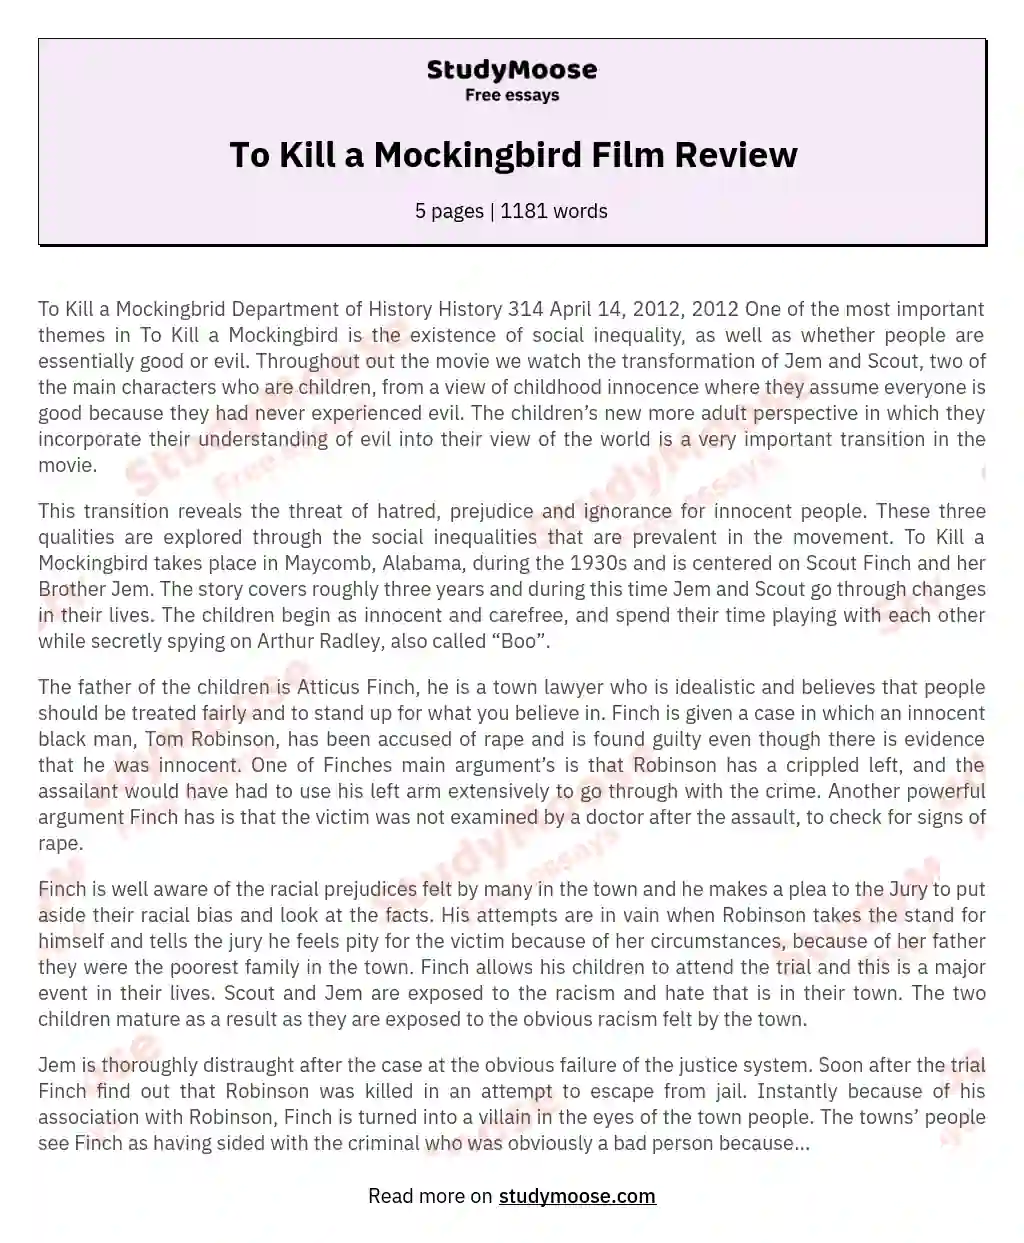 to kill a mockingbird movie review essay